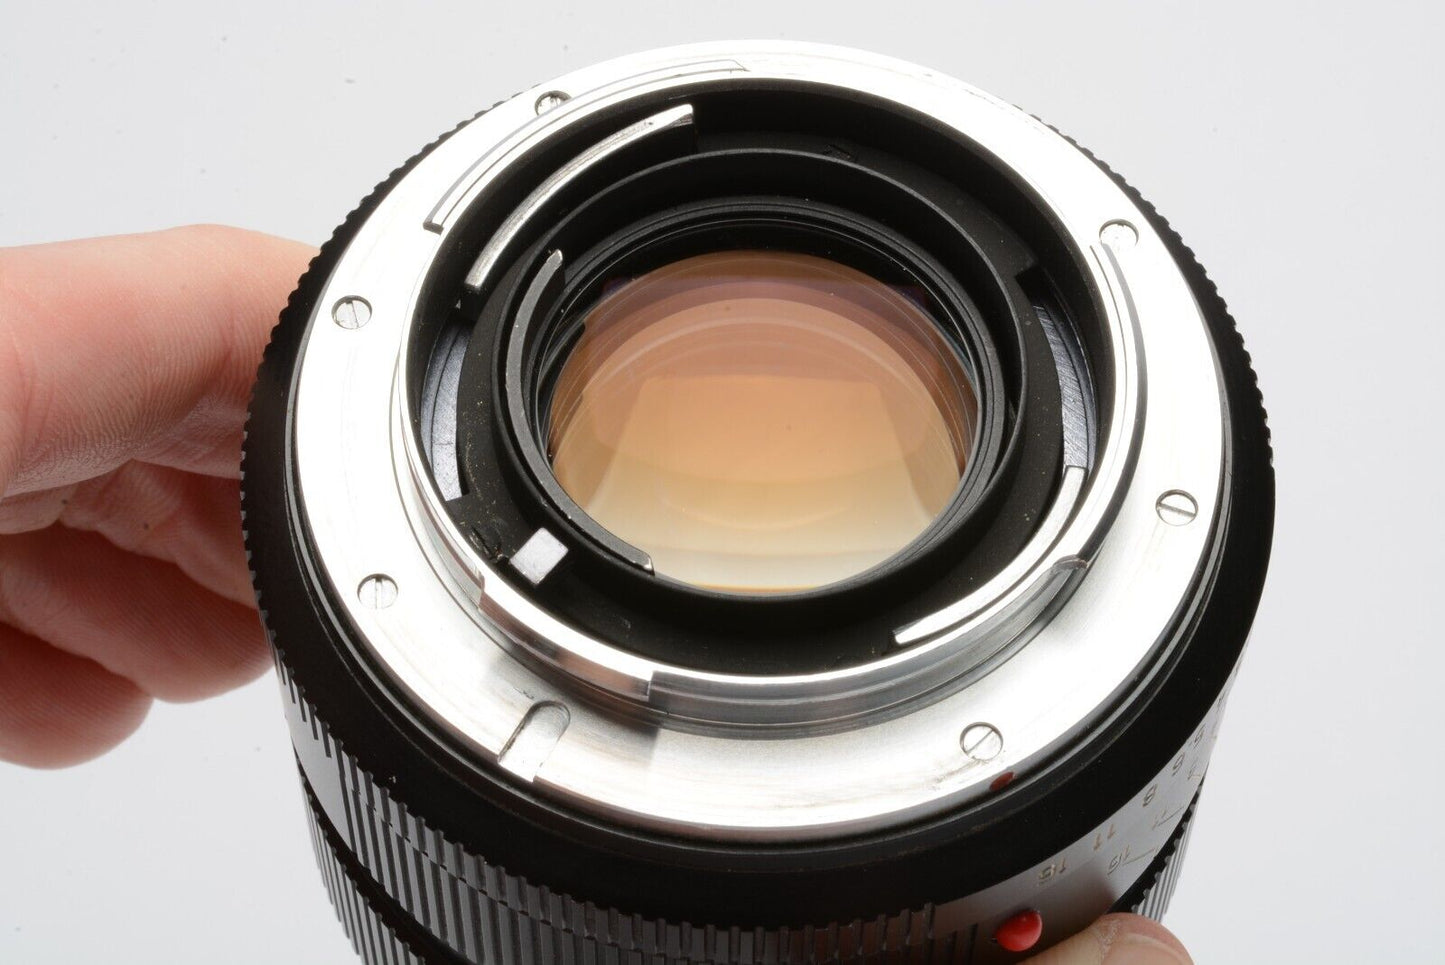 Leica Summicron-R 35mm, F2 V1 #11227, Hood, Very Sharp, Nice